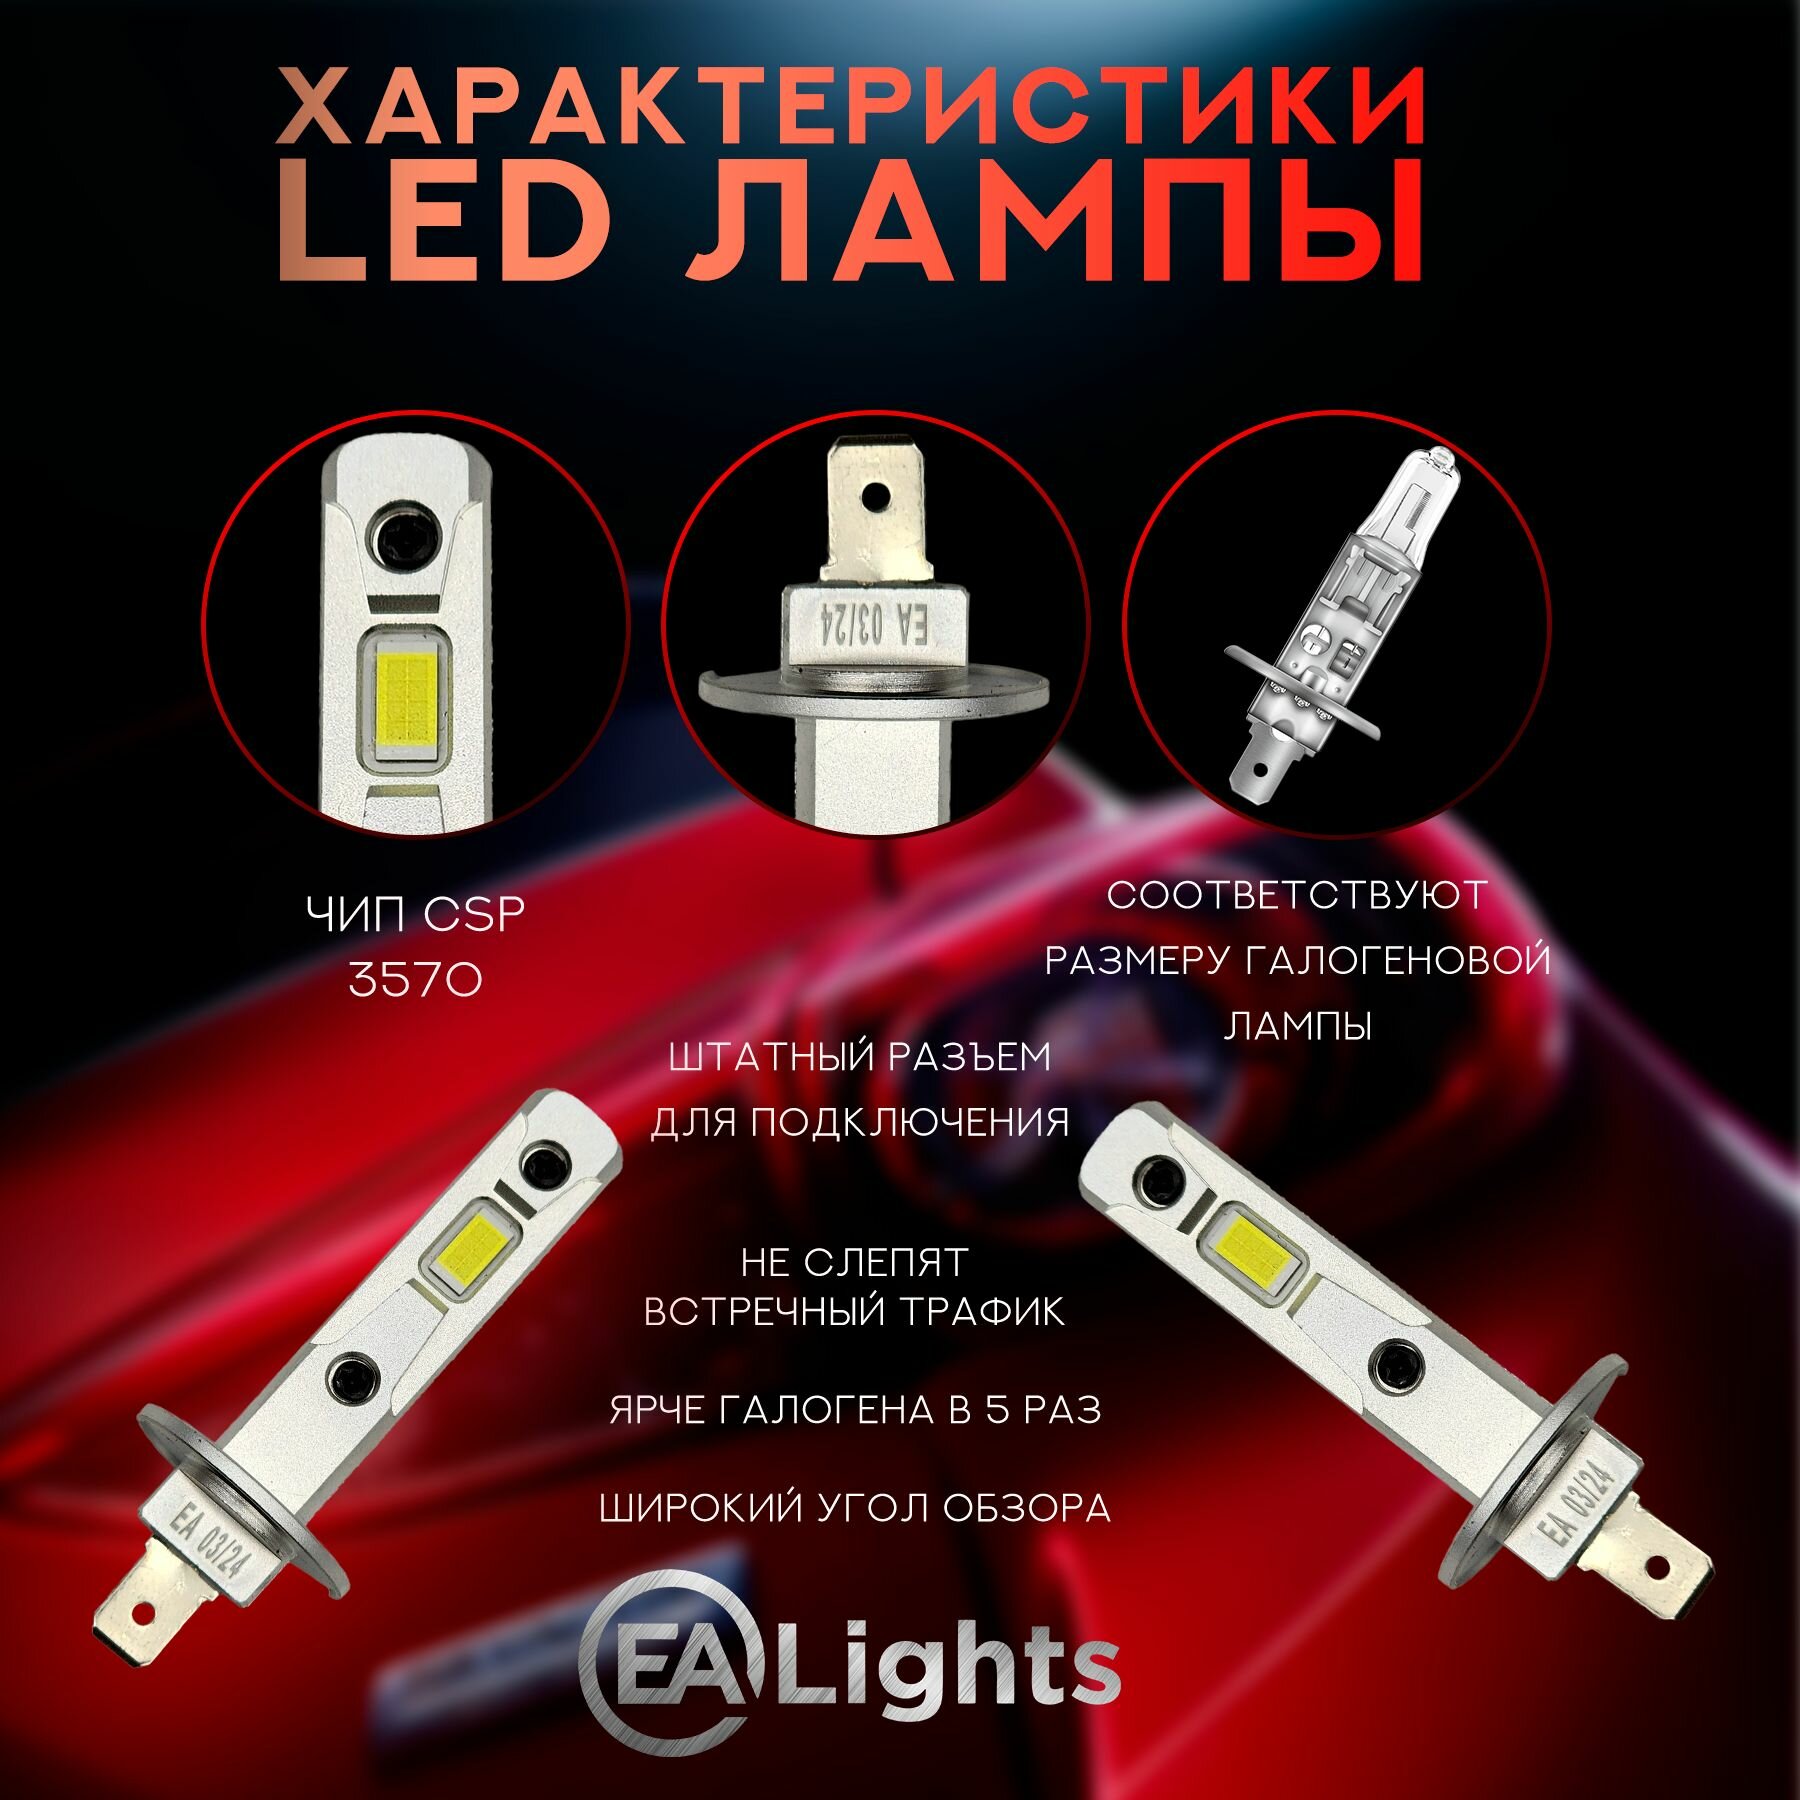 Светодиодная Led лампа с цоколем H1 компактная, мощность 30 Ватт